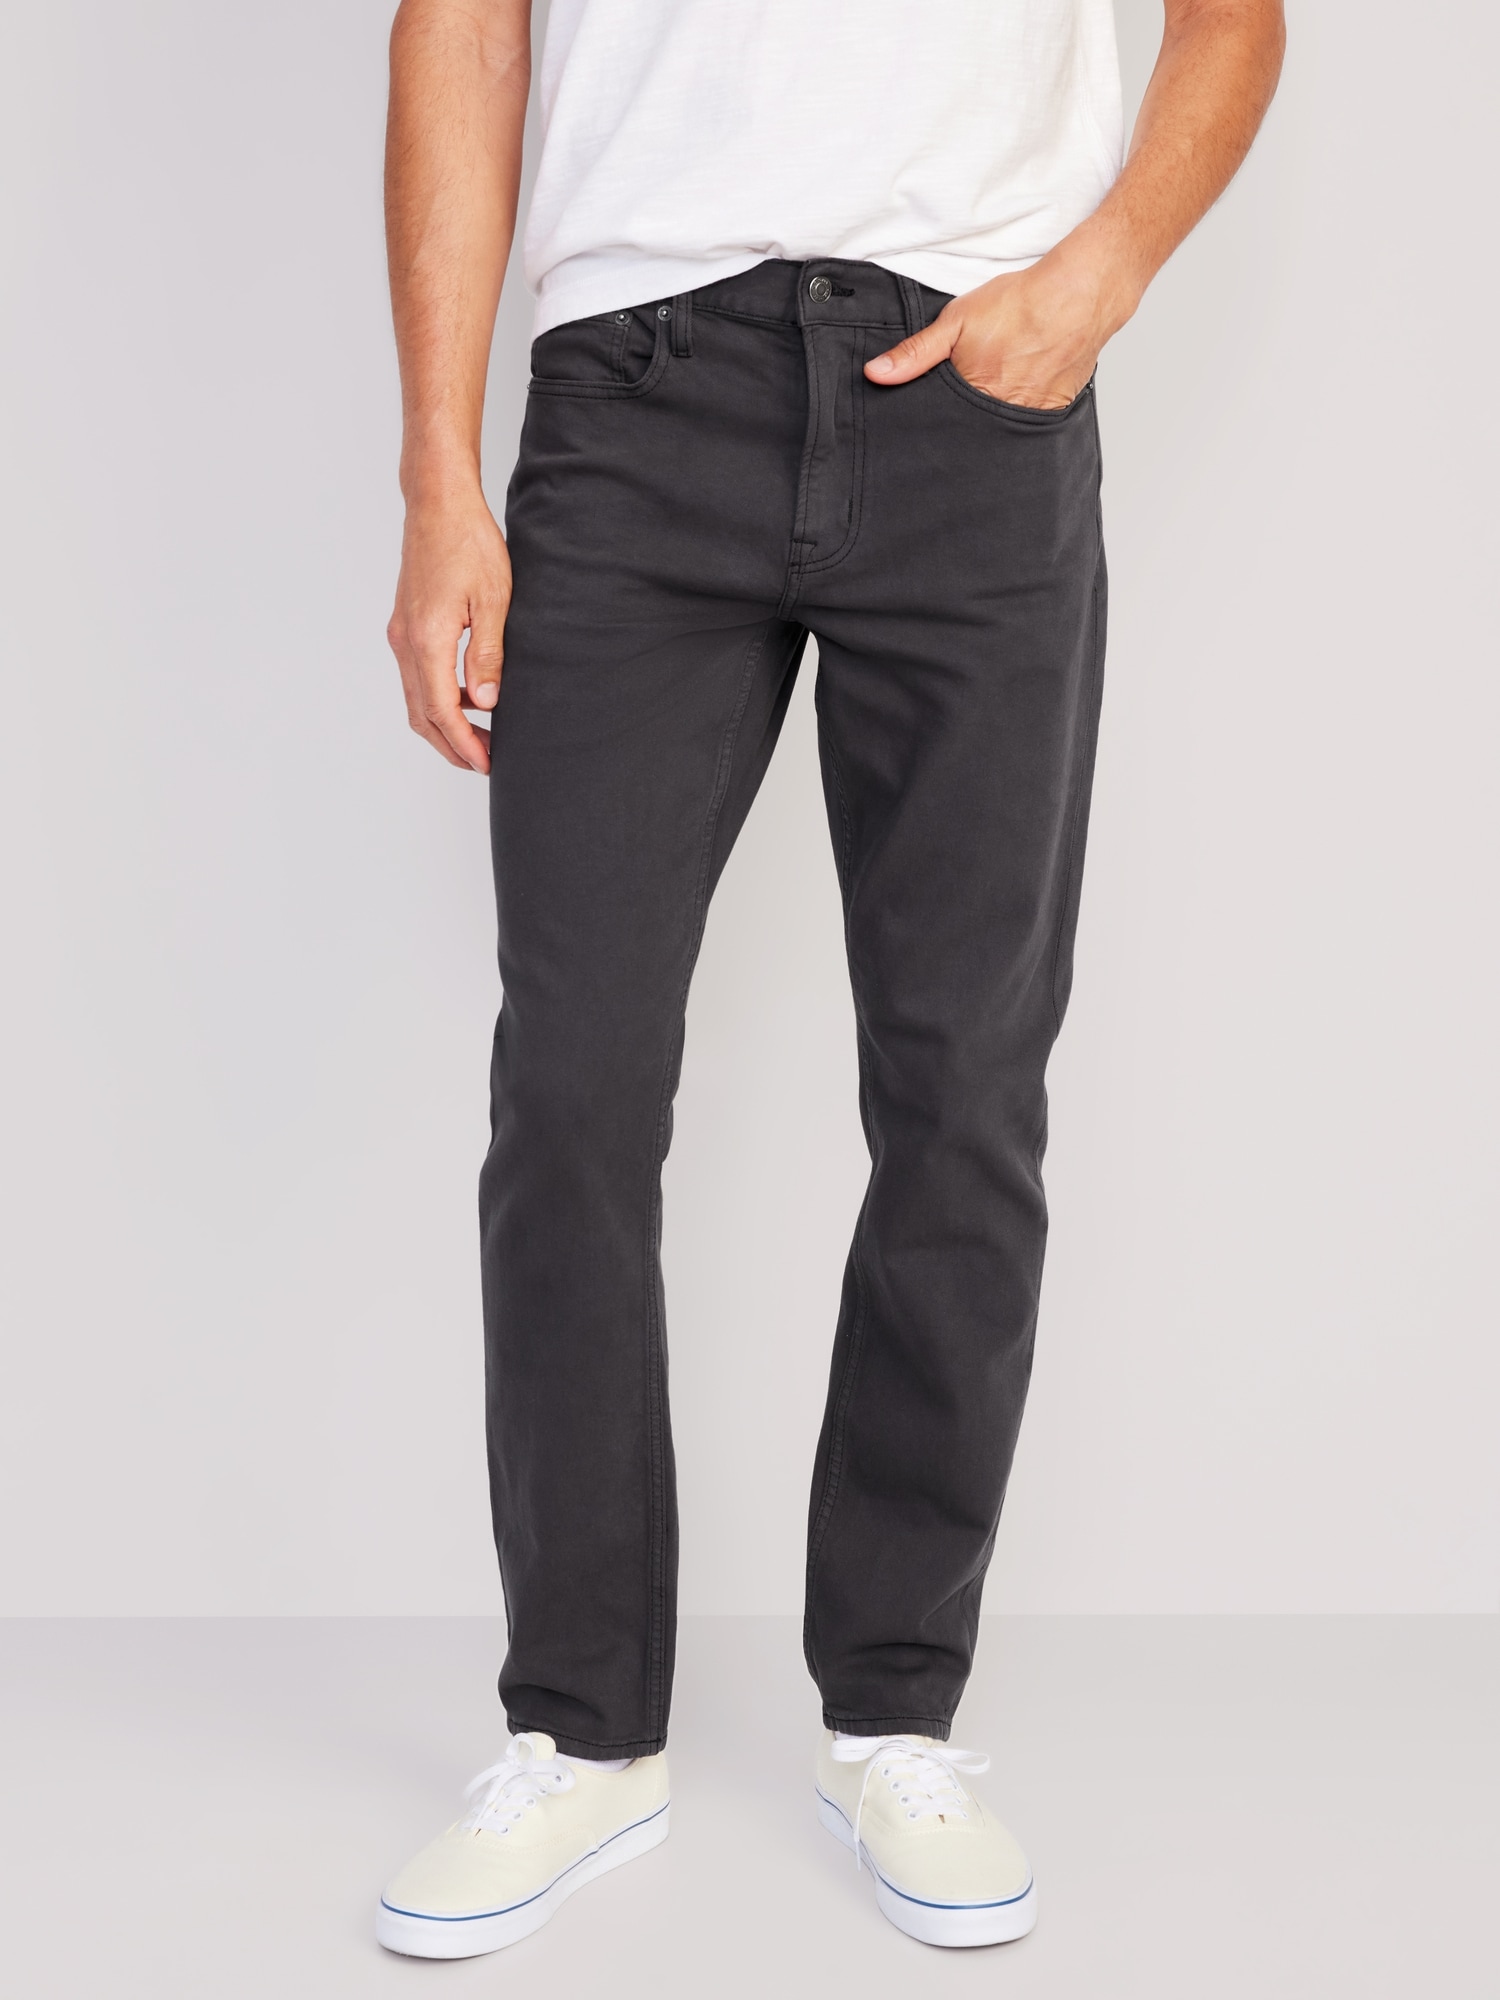 MAVEN Slim Men Grey Jeans - Buy MAVEN Slim Men Grey Jeans Online